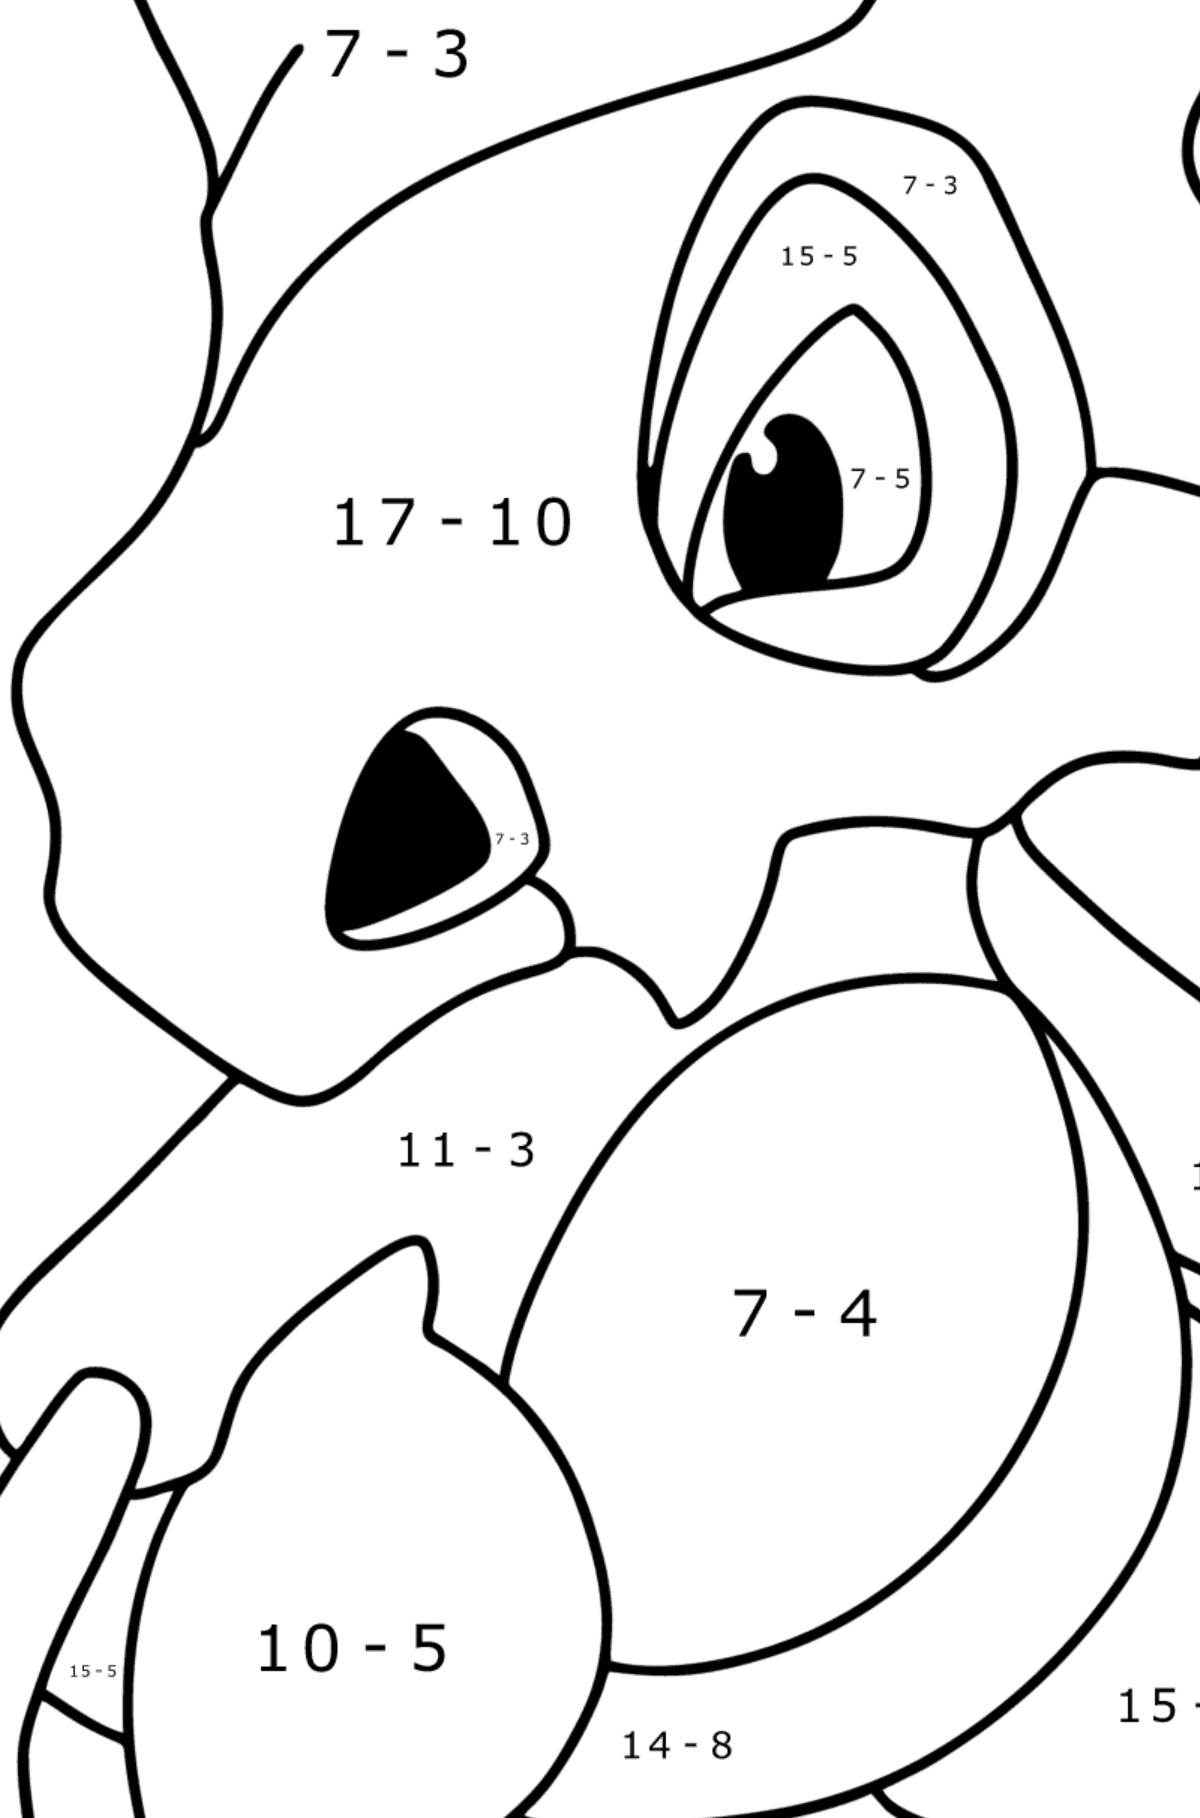 Mewarnai gambar Pokémon Go Cubone - Pewarnaan Matematika: Pengurangan untuk anak-anak